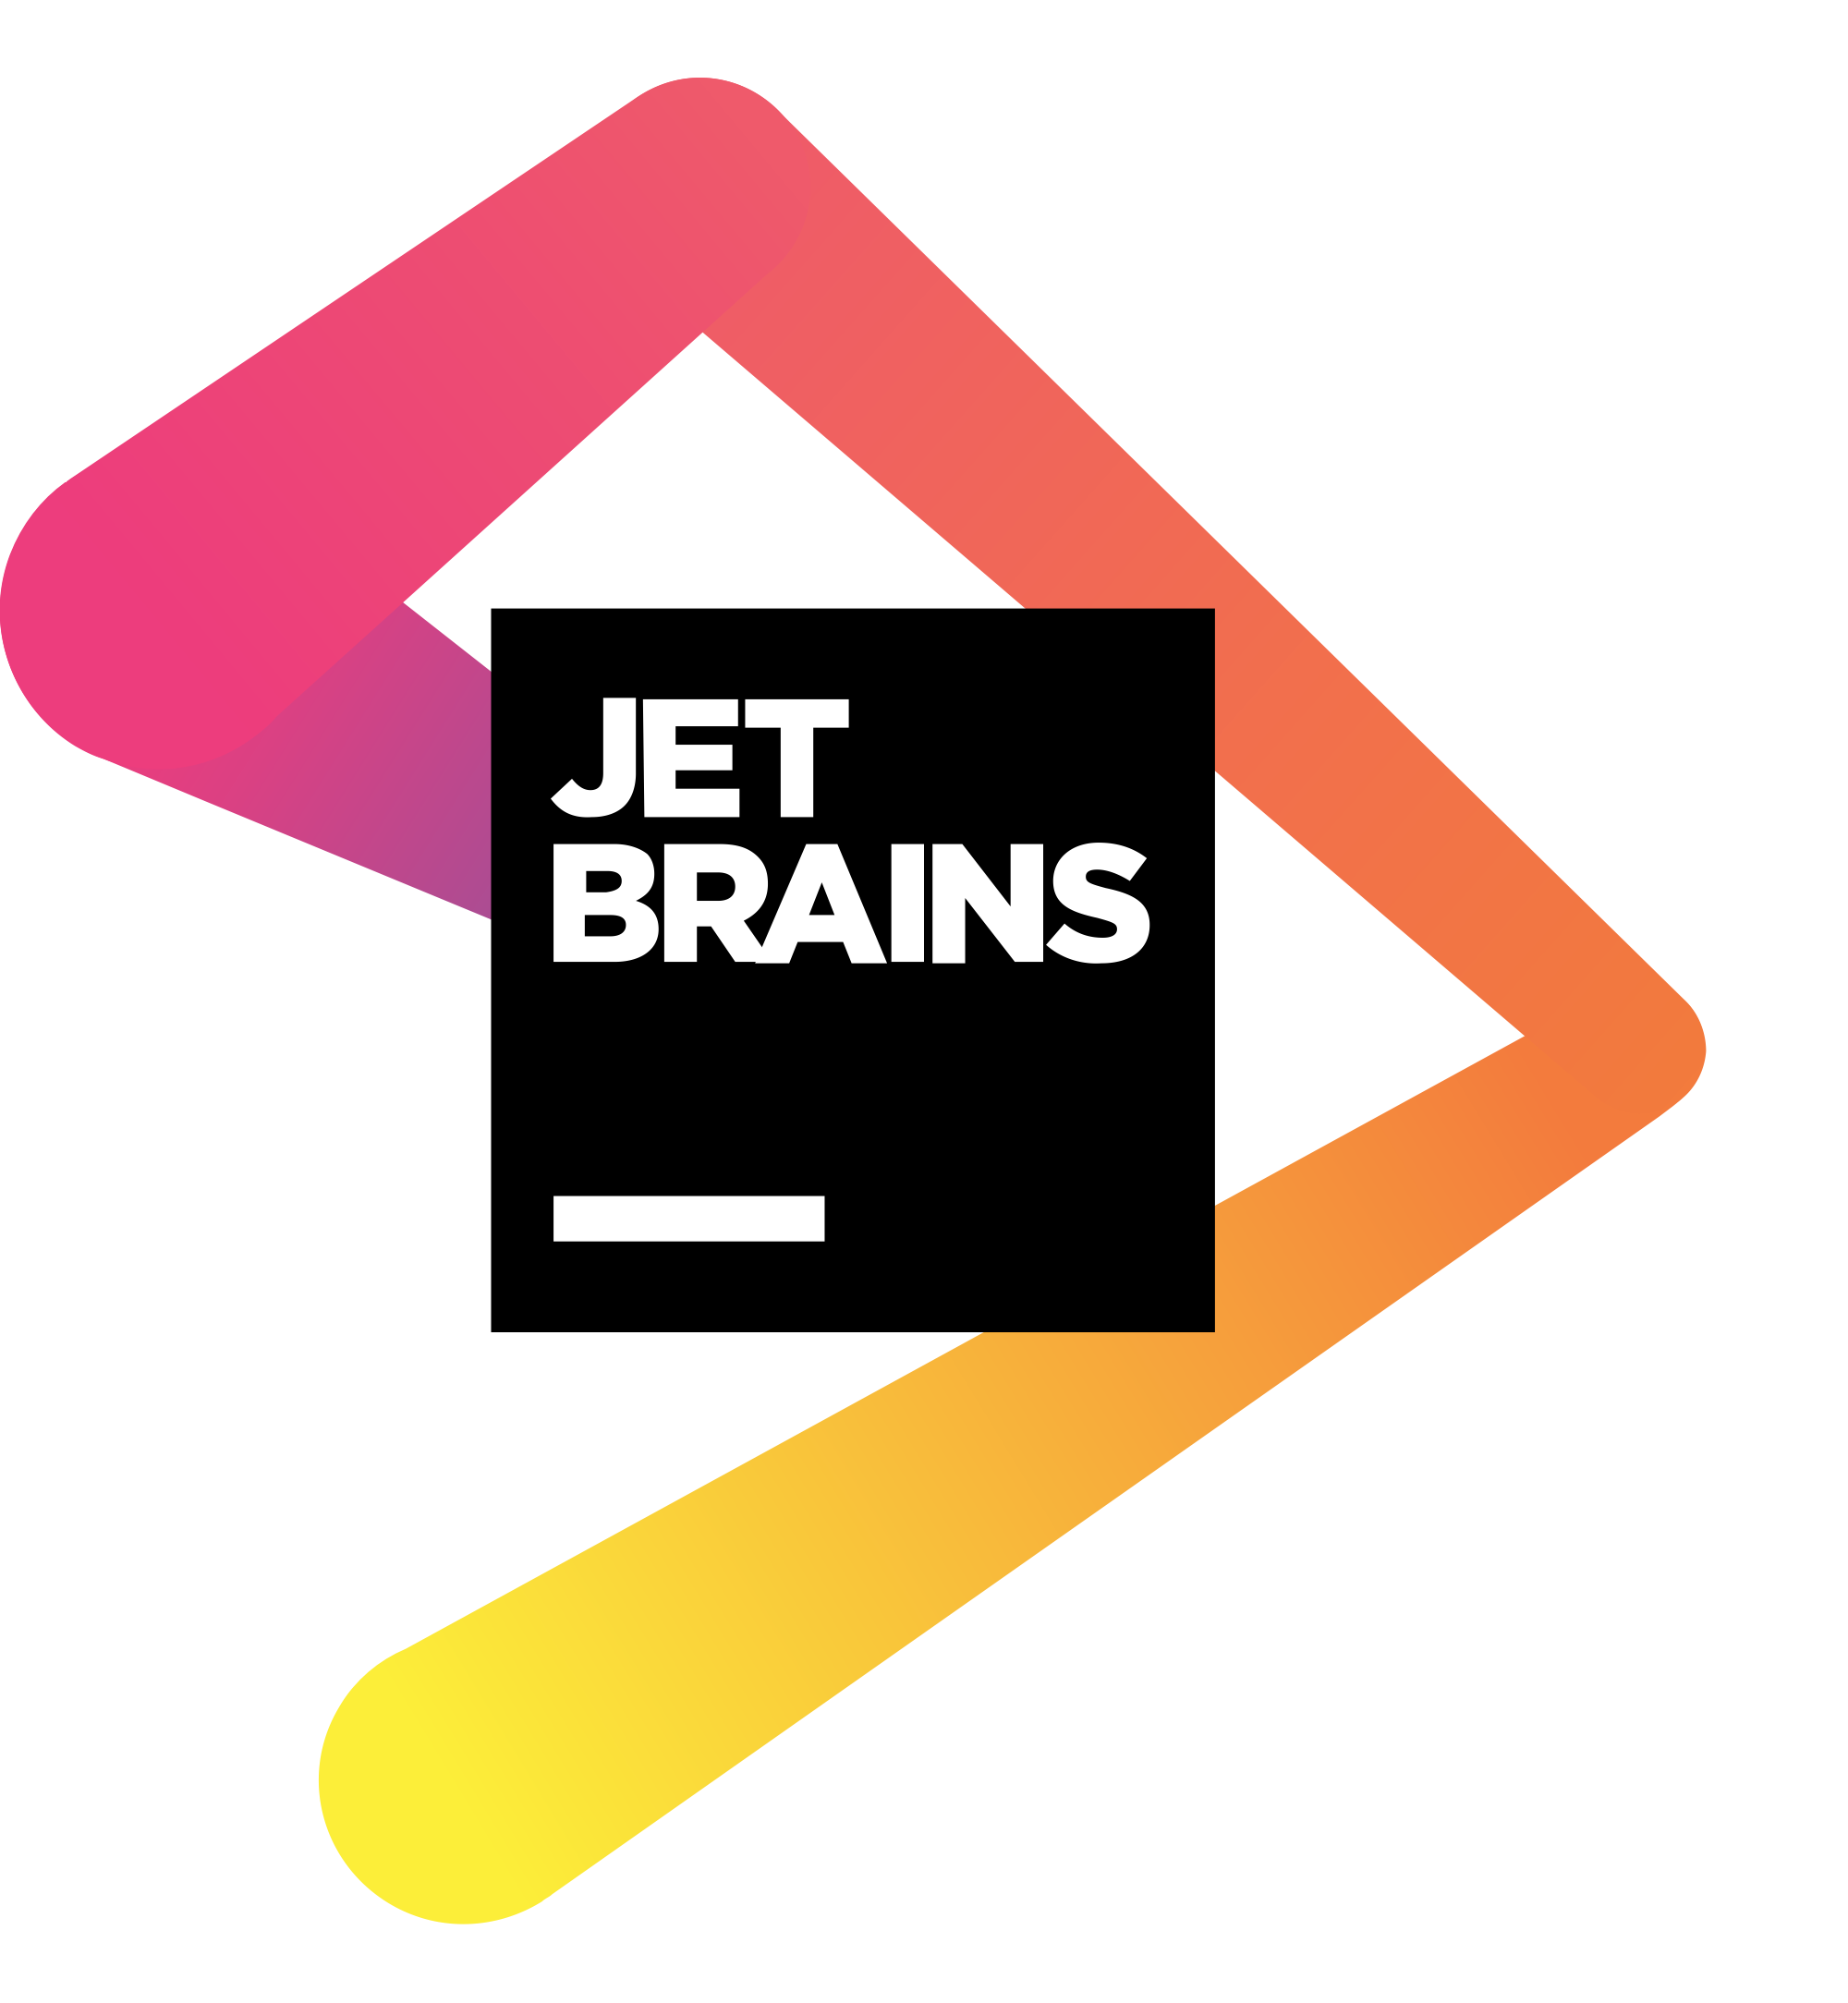 JetBrains' support